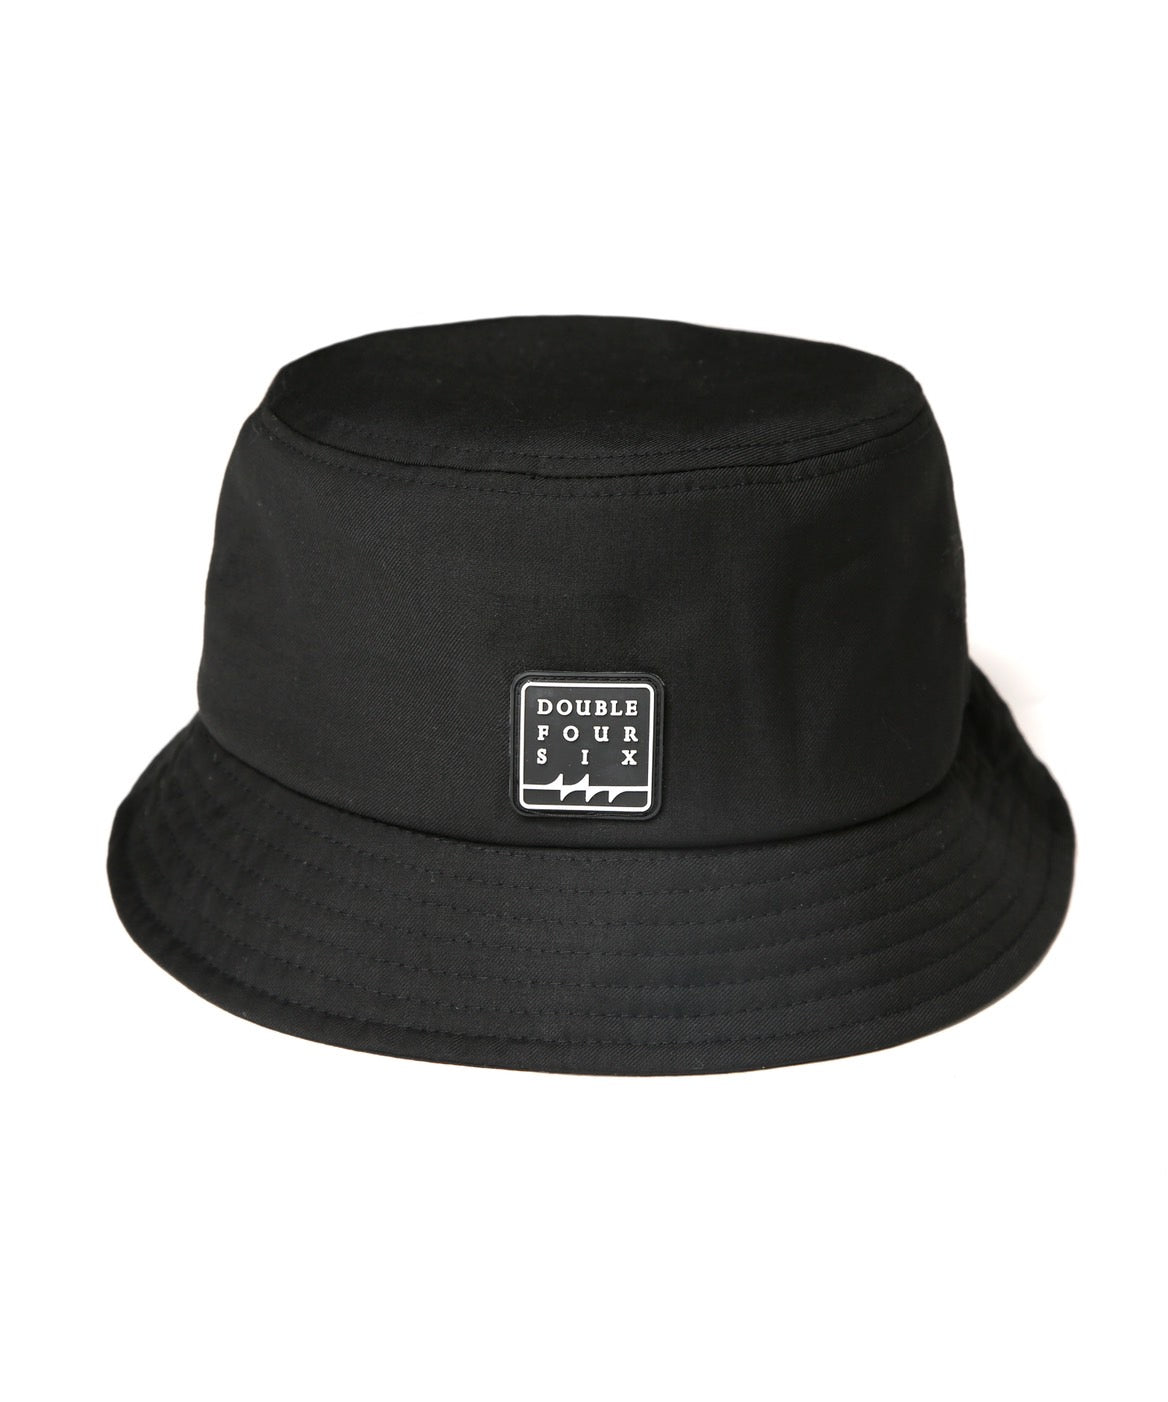 【数量限定商品】DOUBLE FOUR SIX- Rubber Emblem Bucket Hat